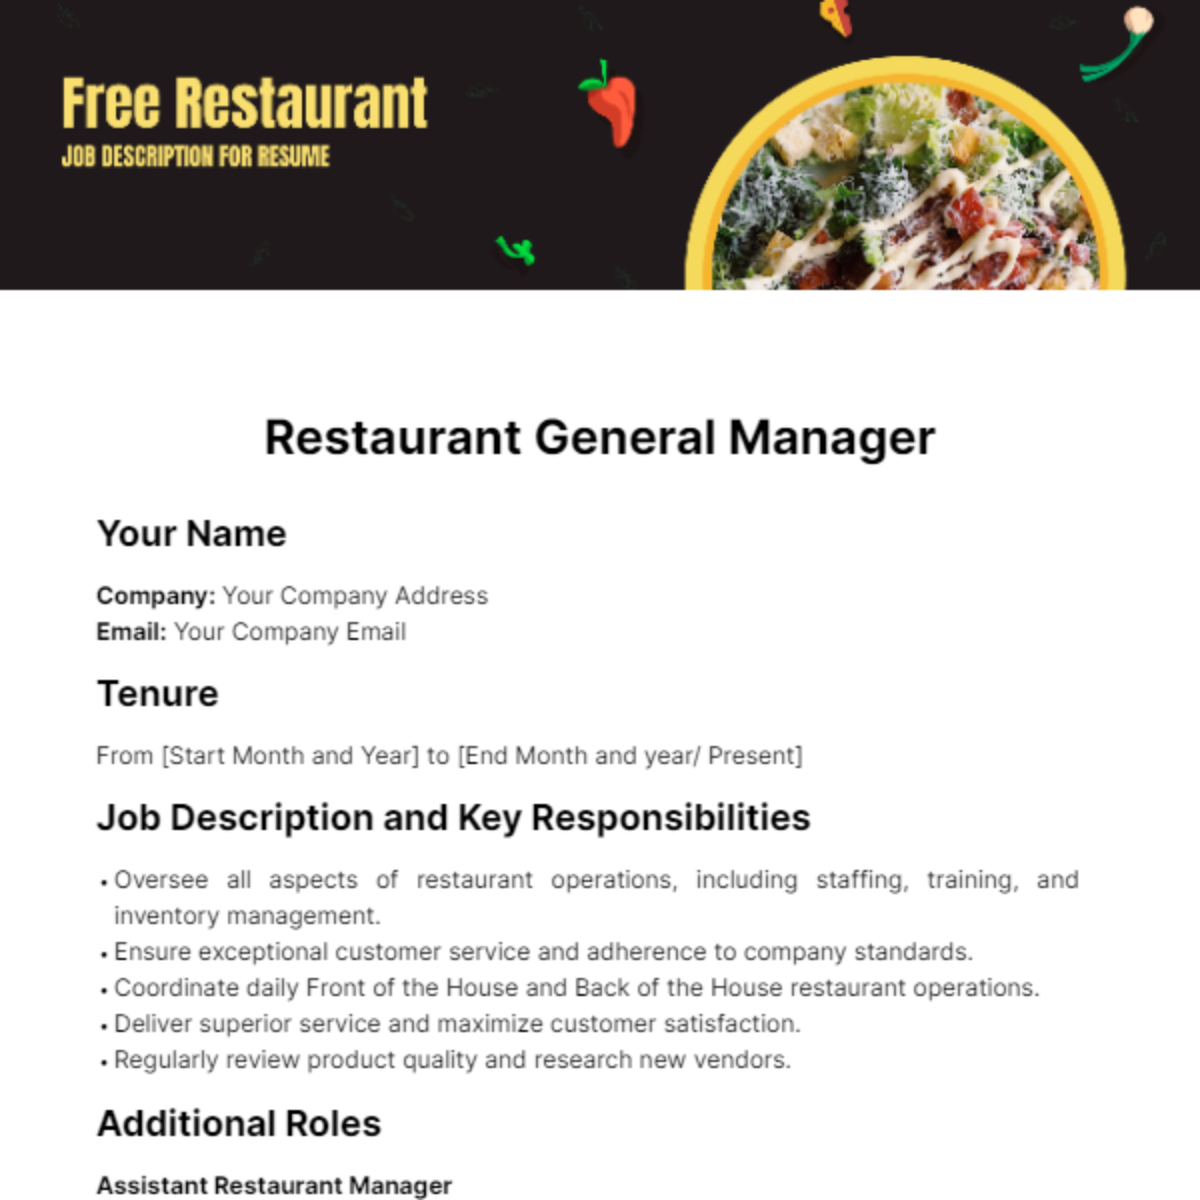 Free Restaurant Manager Job Description for Resume Template